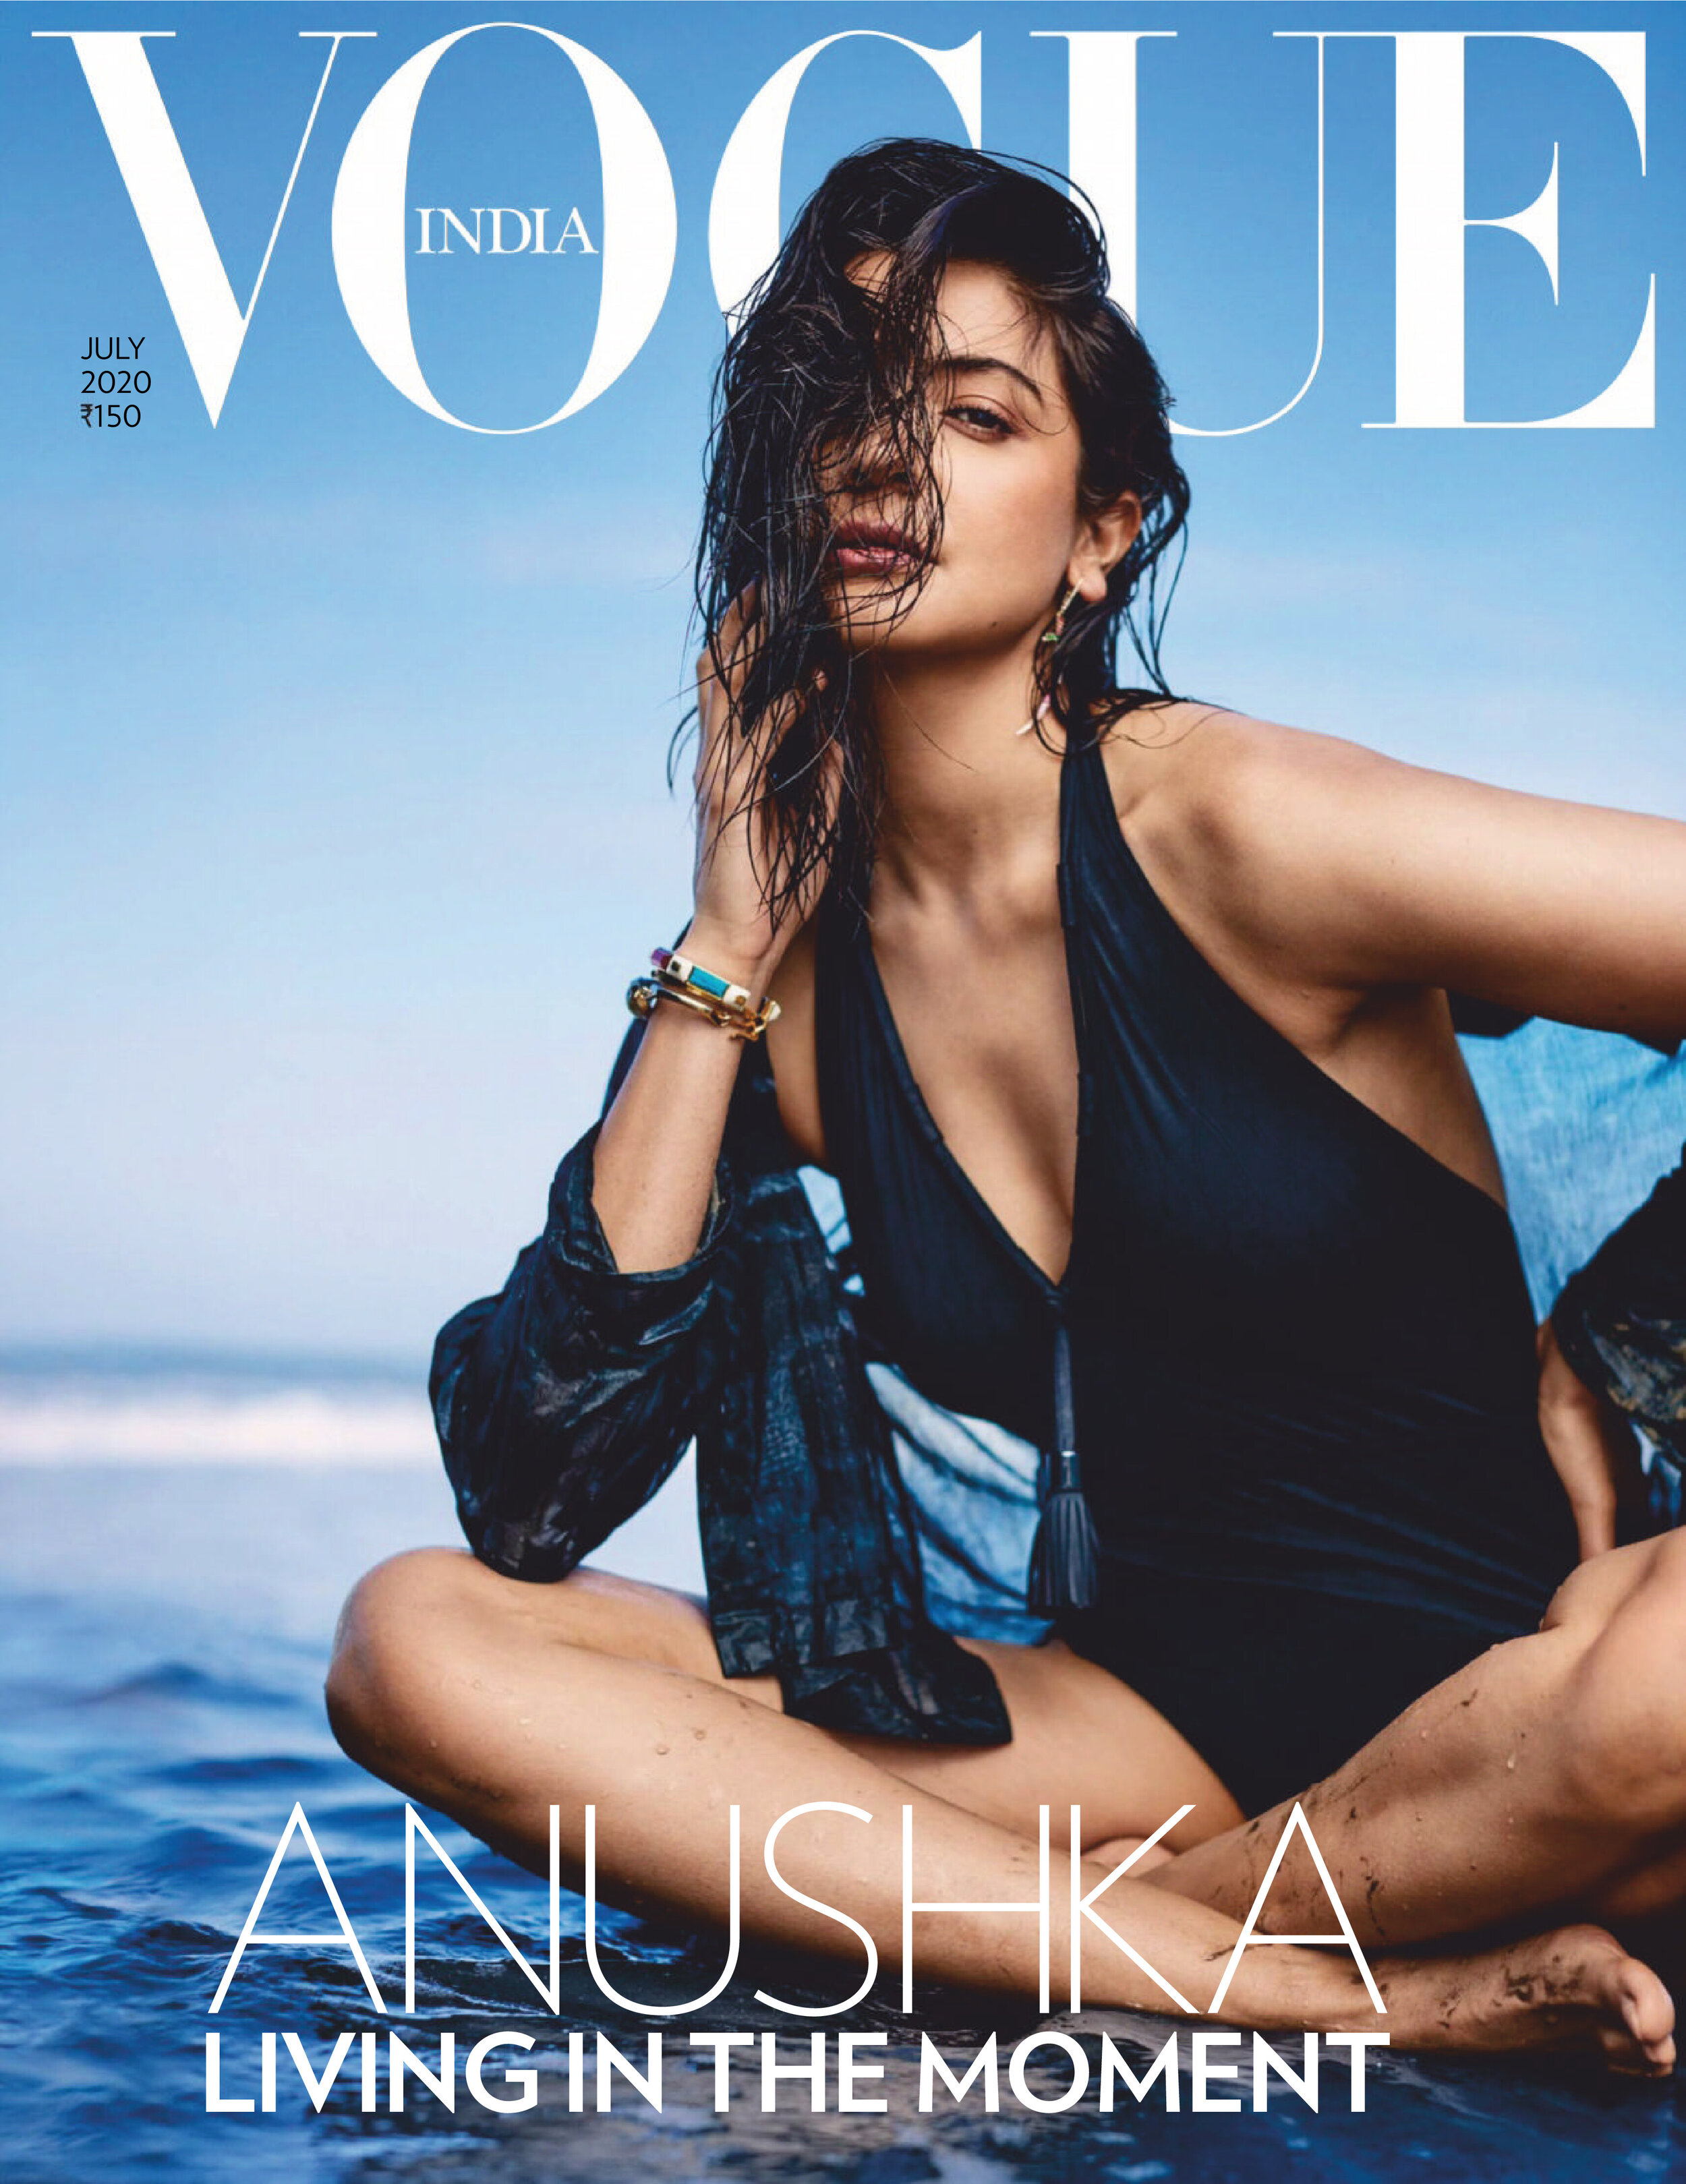 Anushka Sharma by Billy Kidd for Vogue India July 2020 (11).jpg